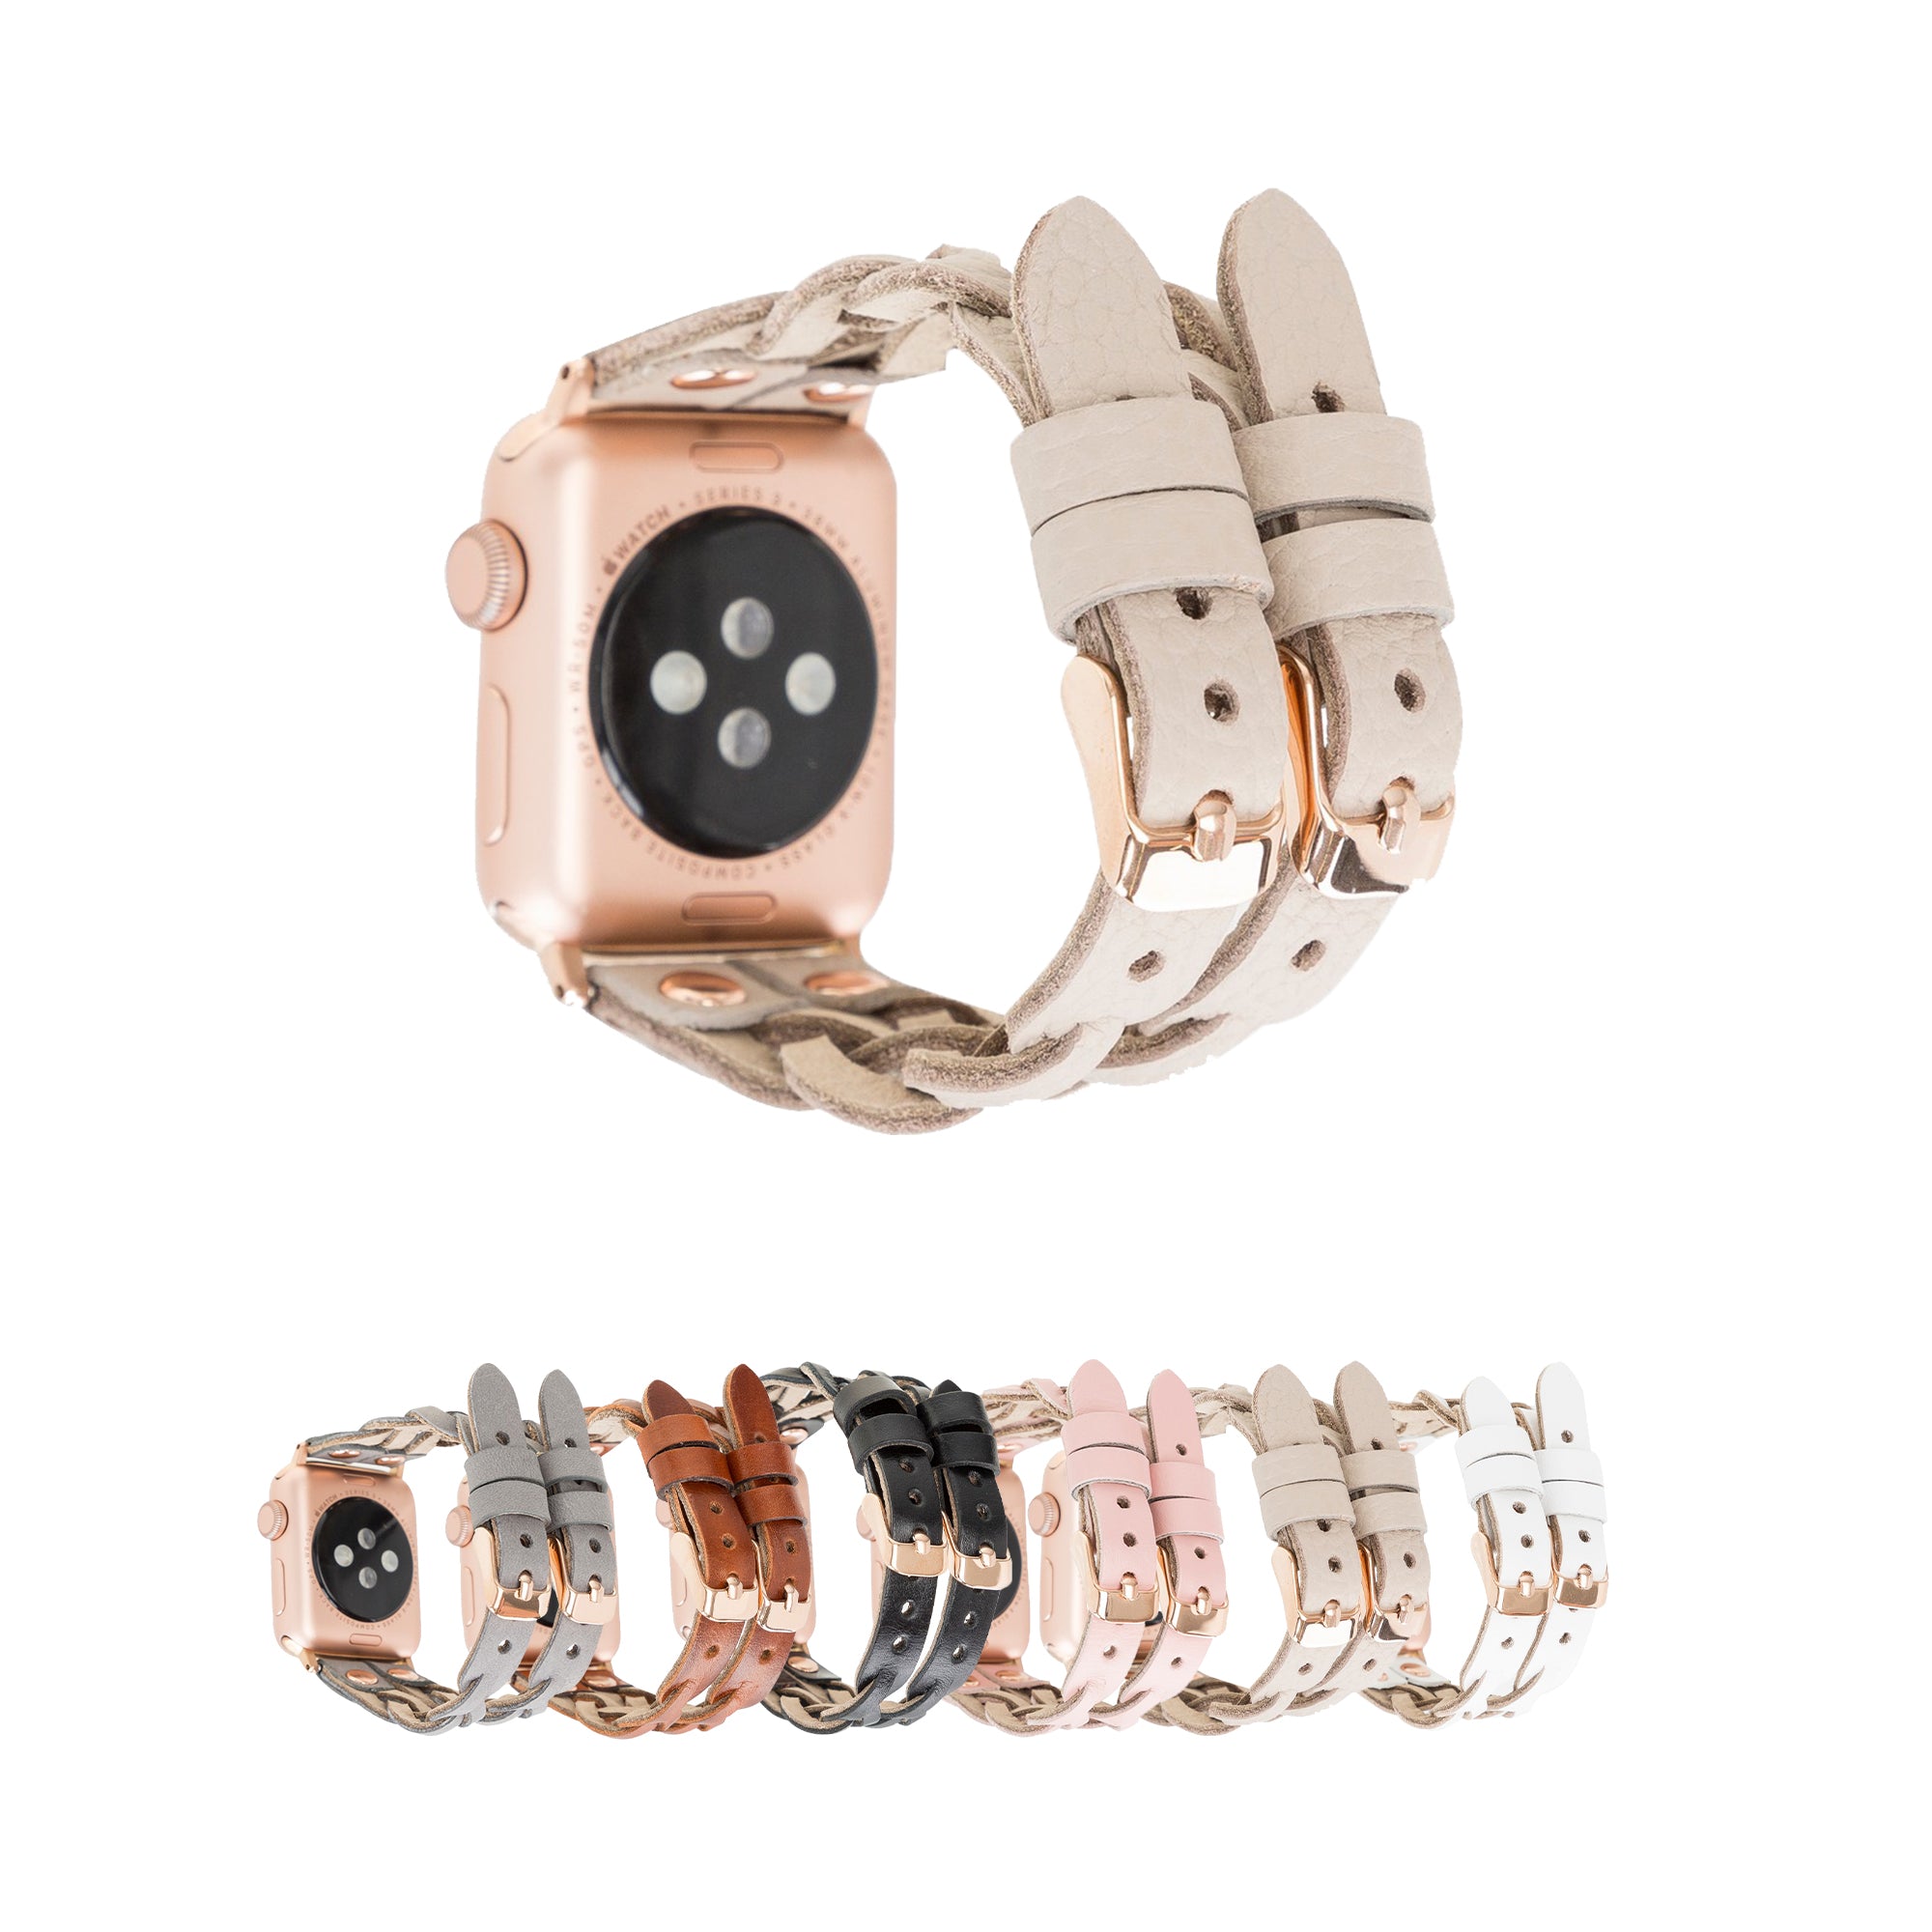 DelfiCase Sheffield-York Double Apple Watch Band for Apple Watch & Fitbit/Sense 17